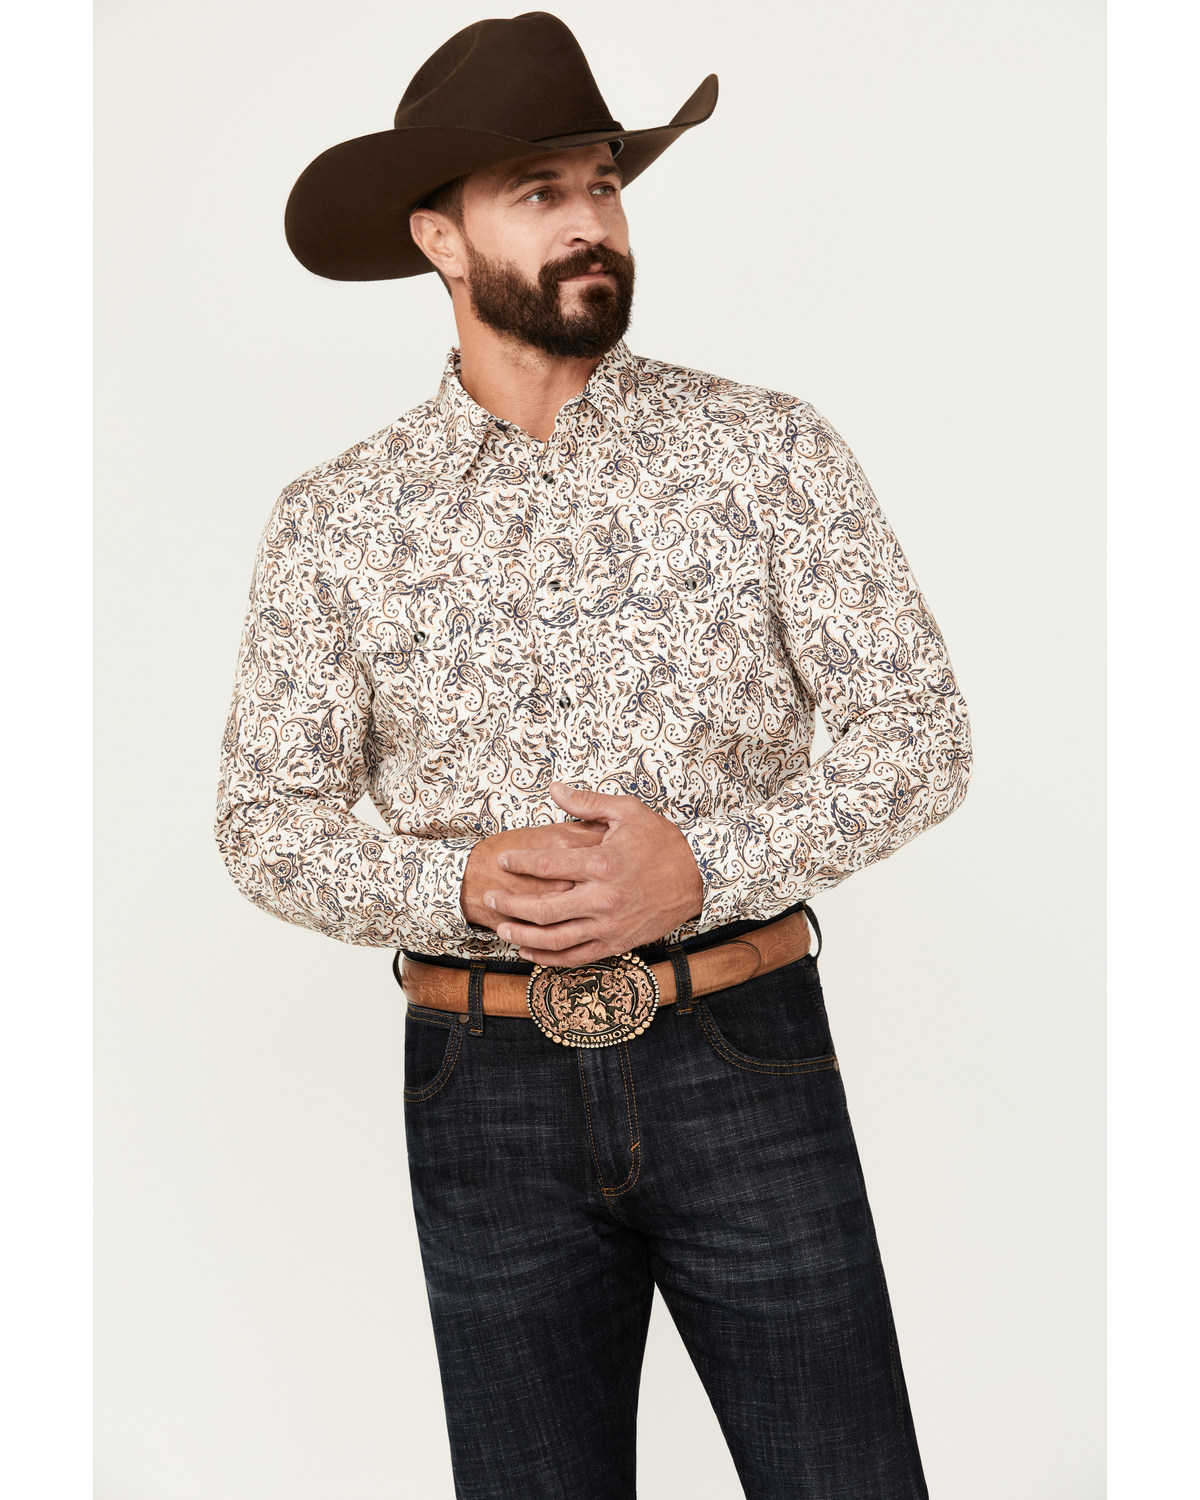 Gibson Trading Co Men's Punk Paisley Print Long Sleeve Snap Western Shirt